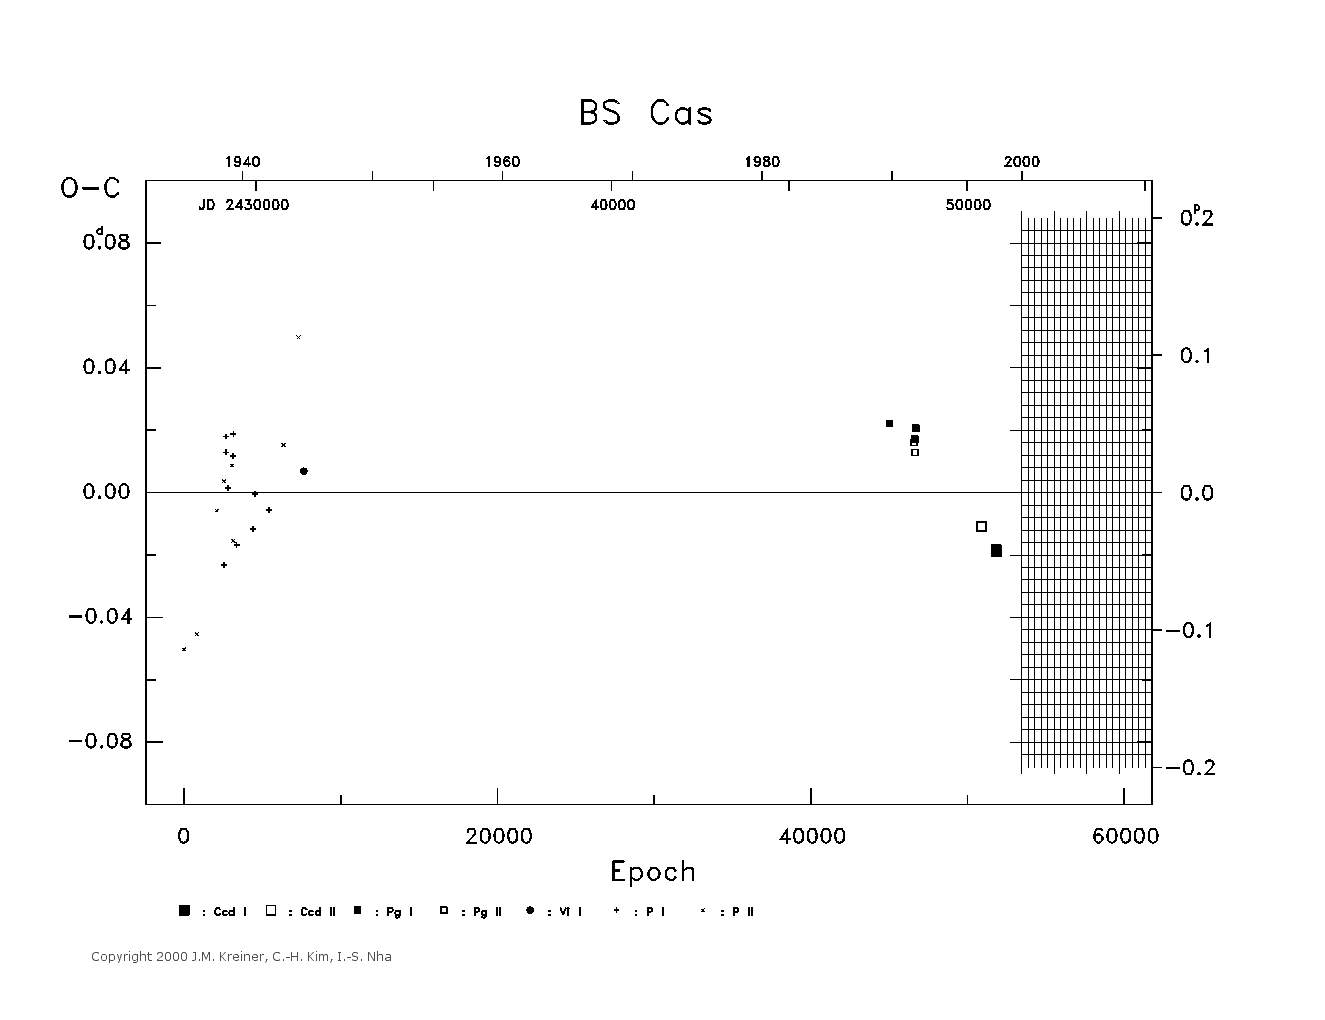 [IMAGE: large BS CAS O-C diagram]